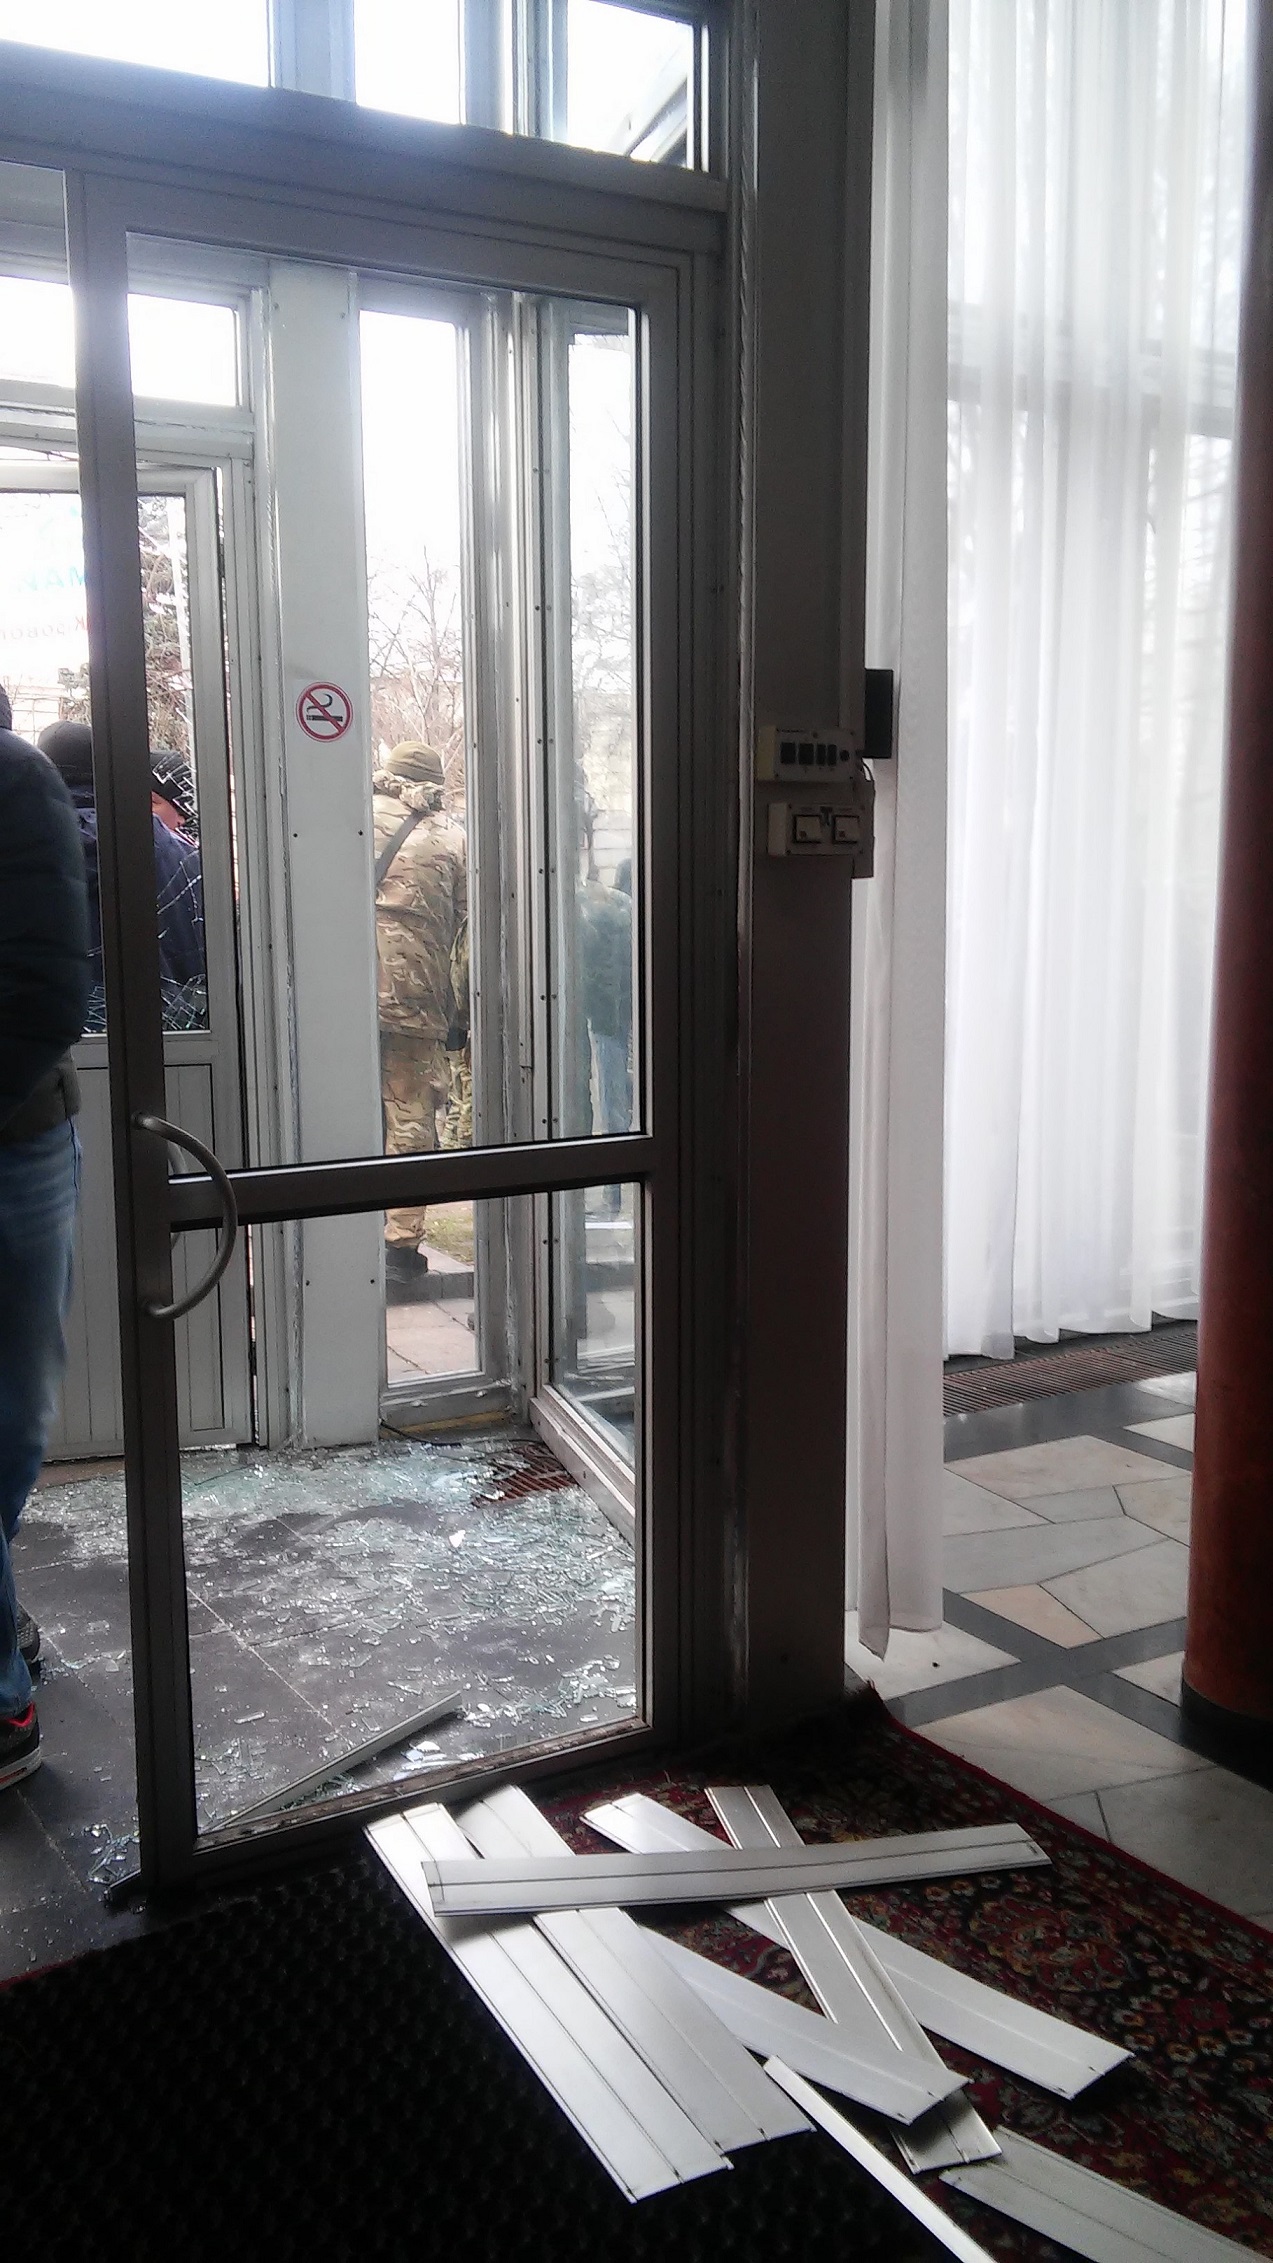 Активисты двух Майданов разгромили здание парламентского комитета в поддержку законопроекта Вилкула (фото)